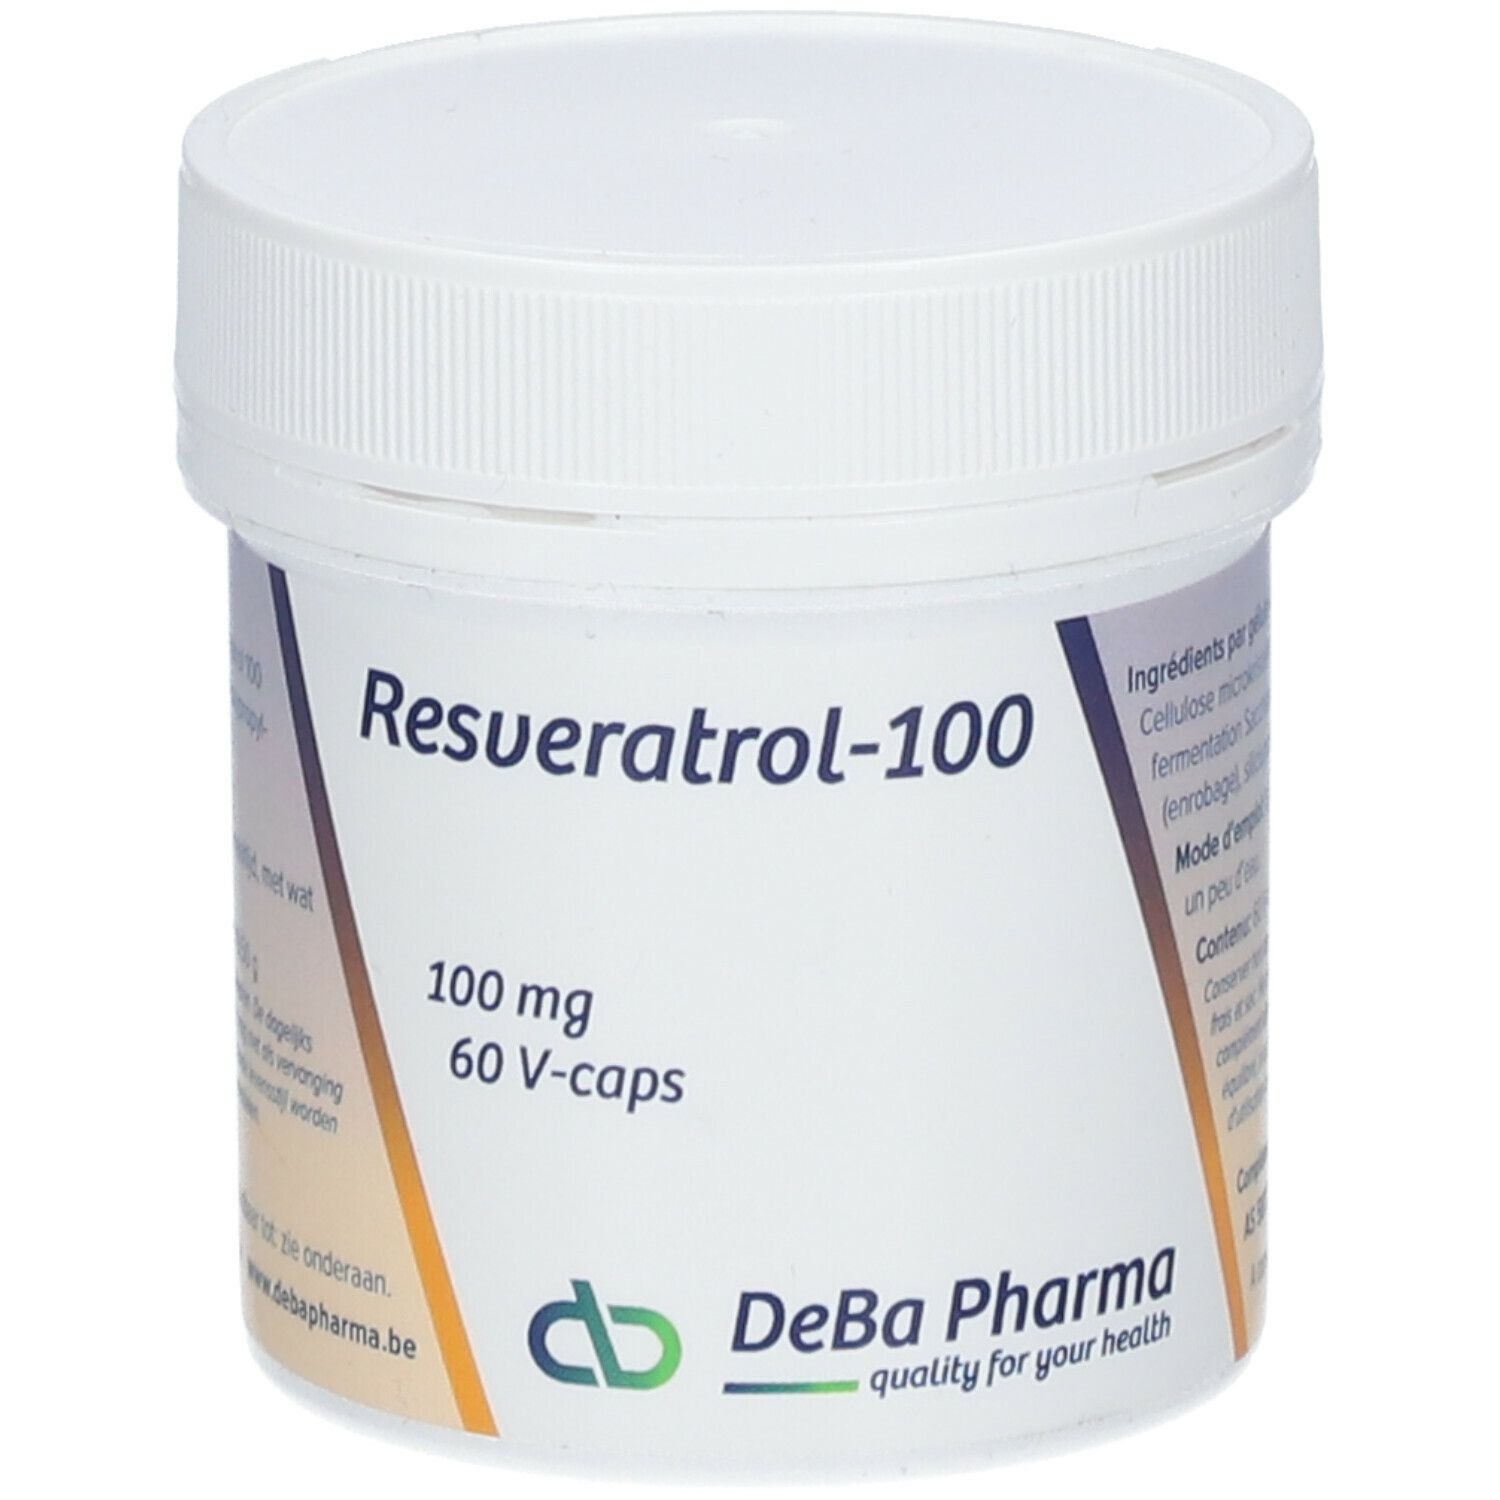 DeBa Pharma Resveratrol-100